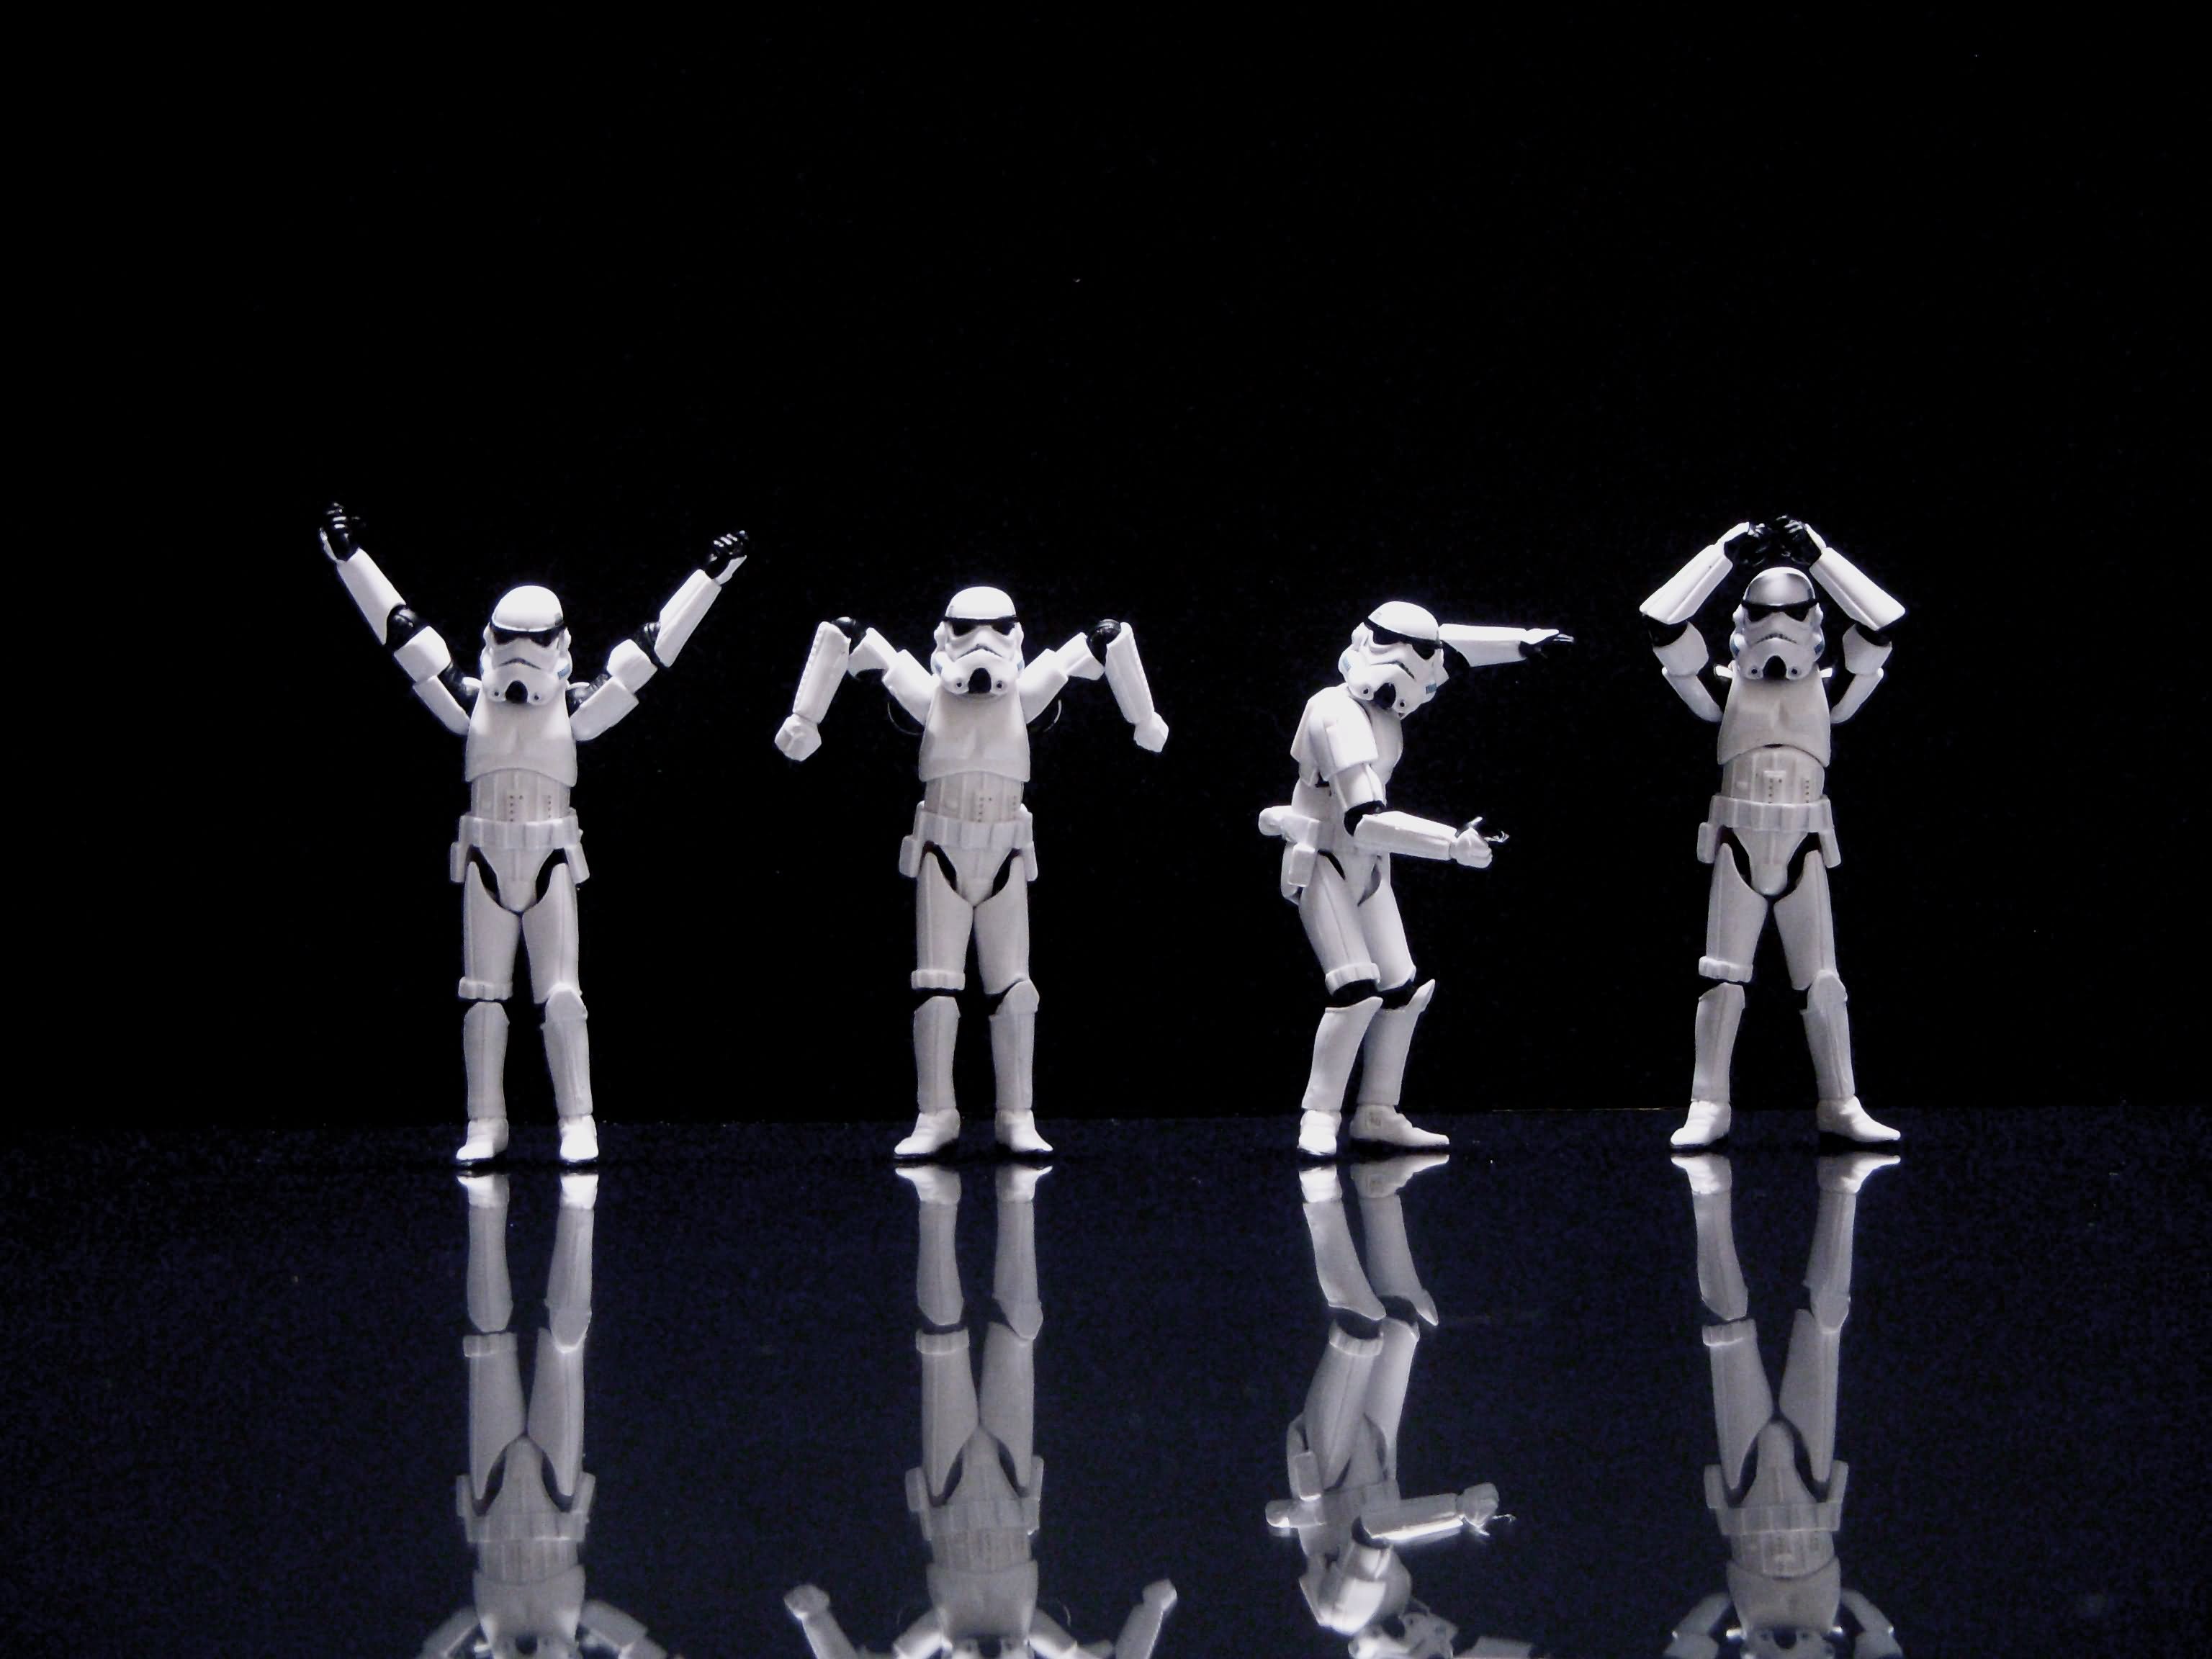 Funny Darth Vader Dancing Star Wars Image